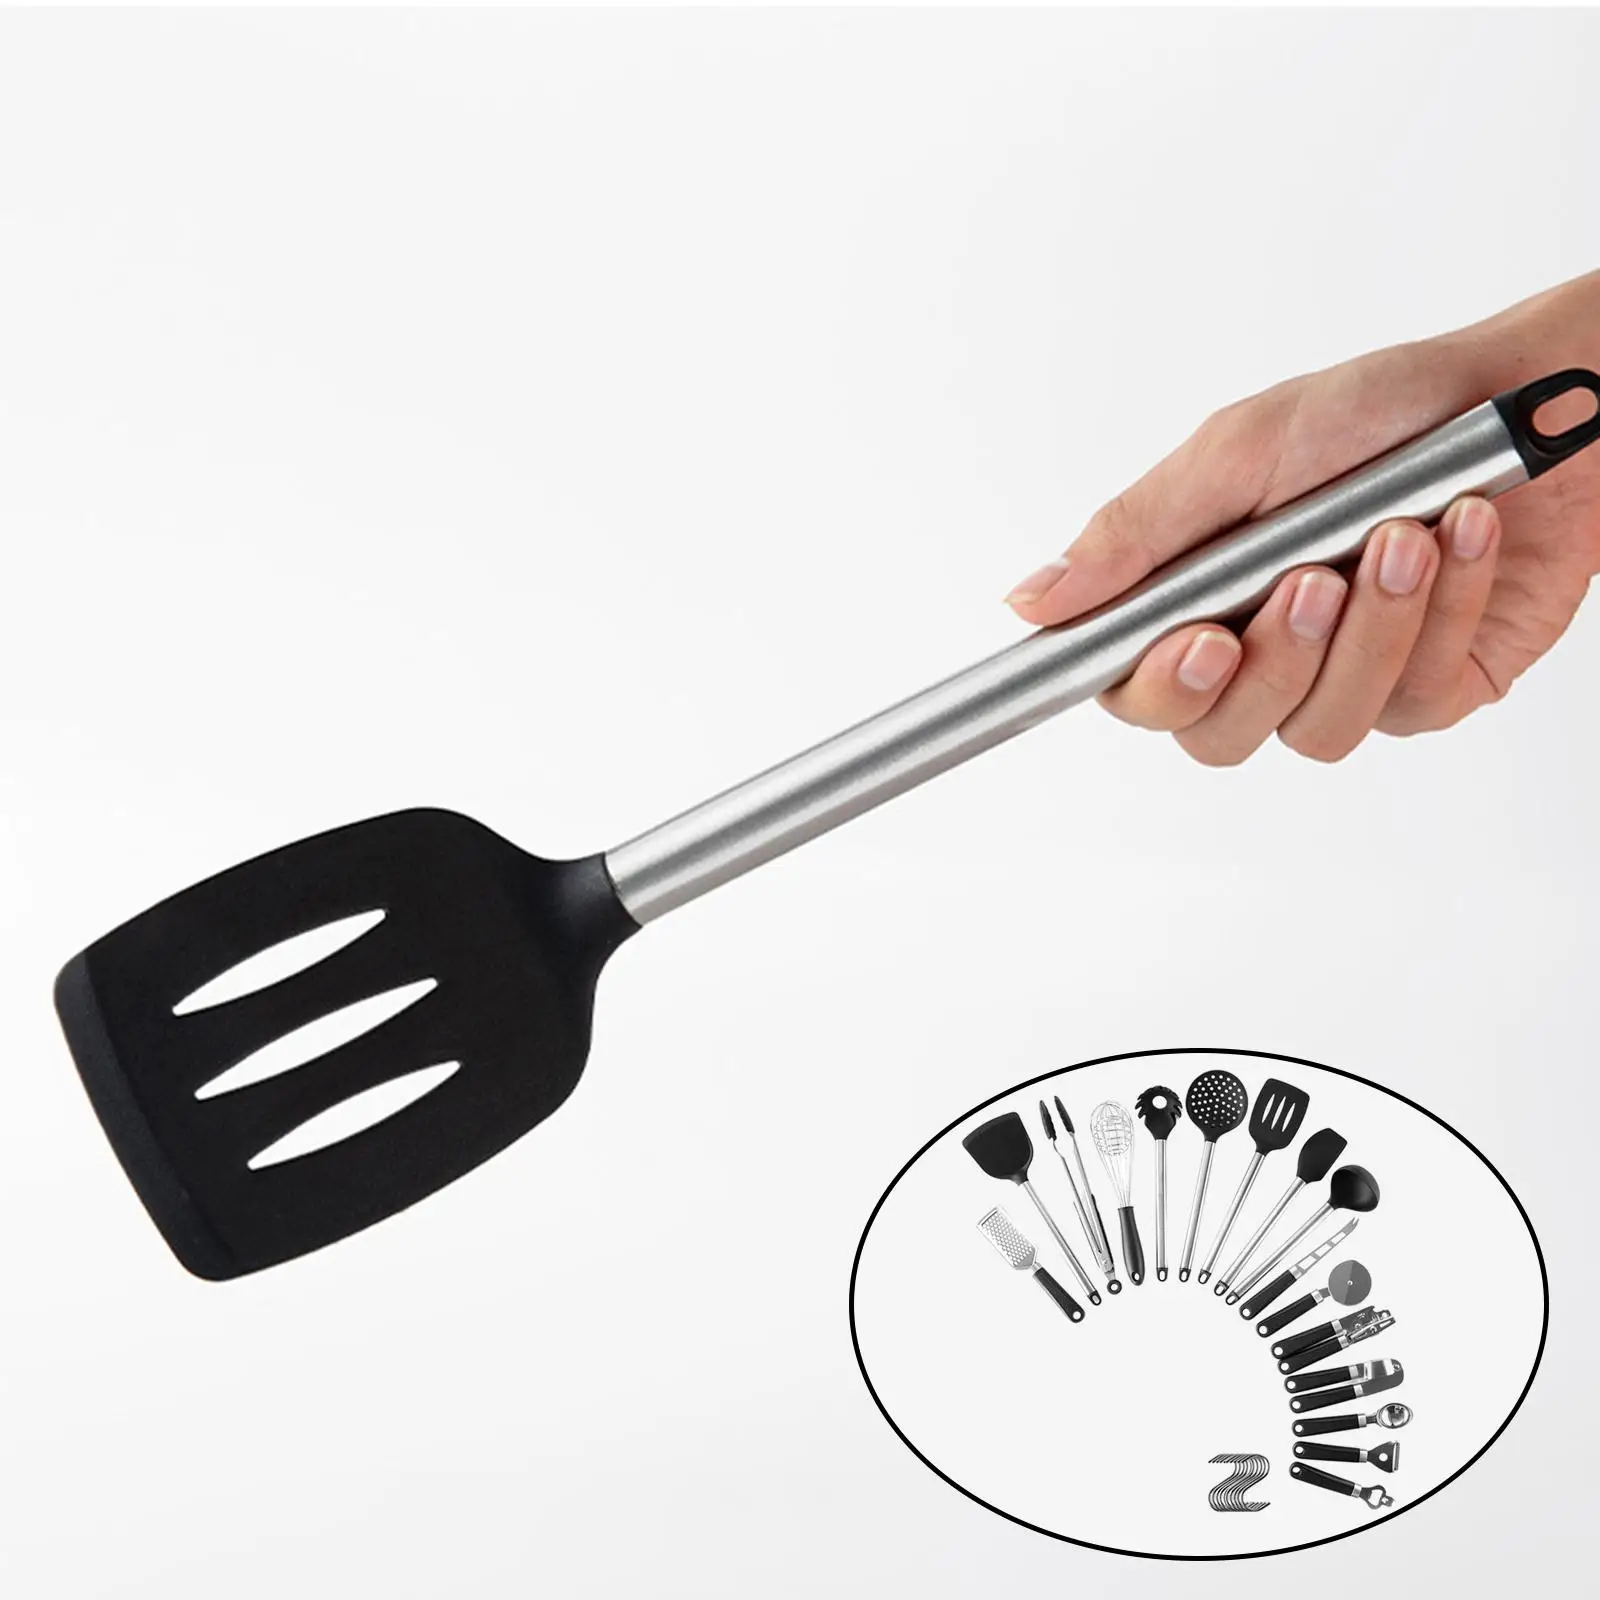  16pcs Kitchen Utensils Non-stick Cookware Gadgets 